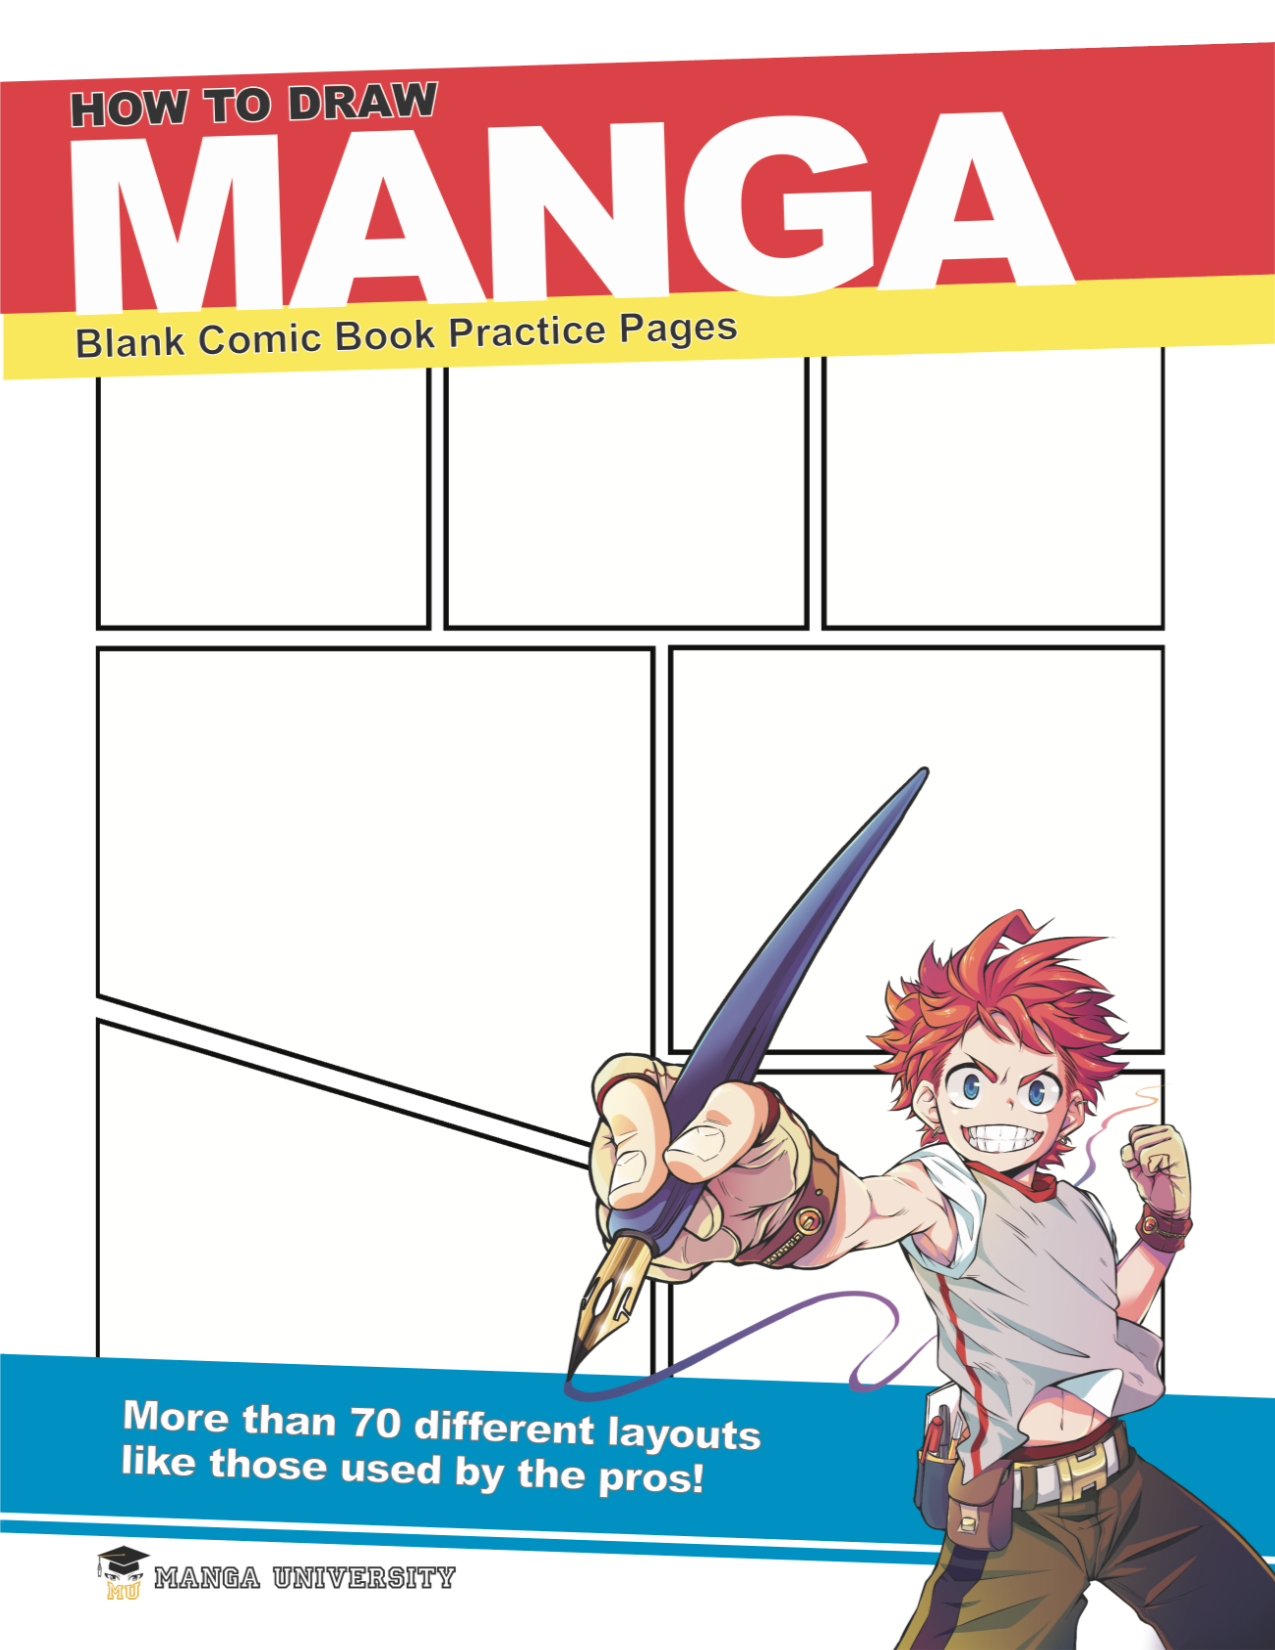 Manga Anime Coloring Book: Buy Manga Anime Coloring Book by Star Inkway at  Low Price in India | Flipkart.com